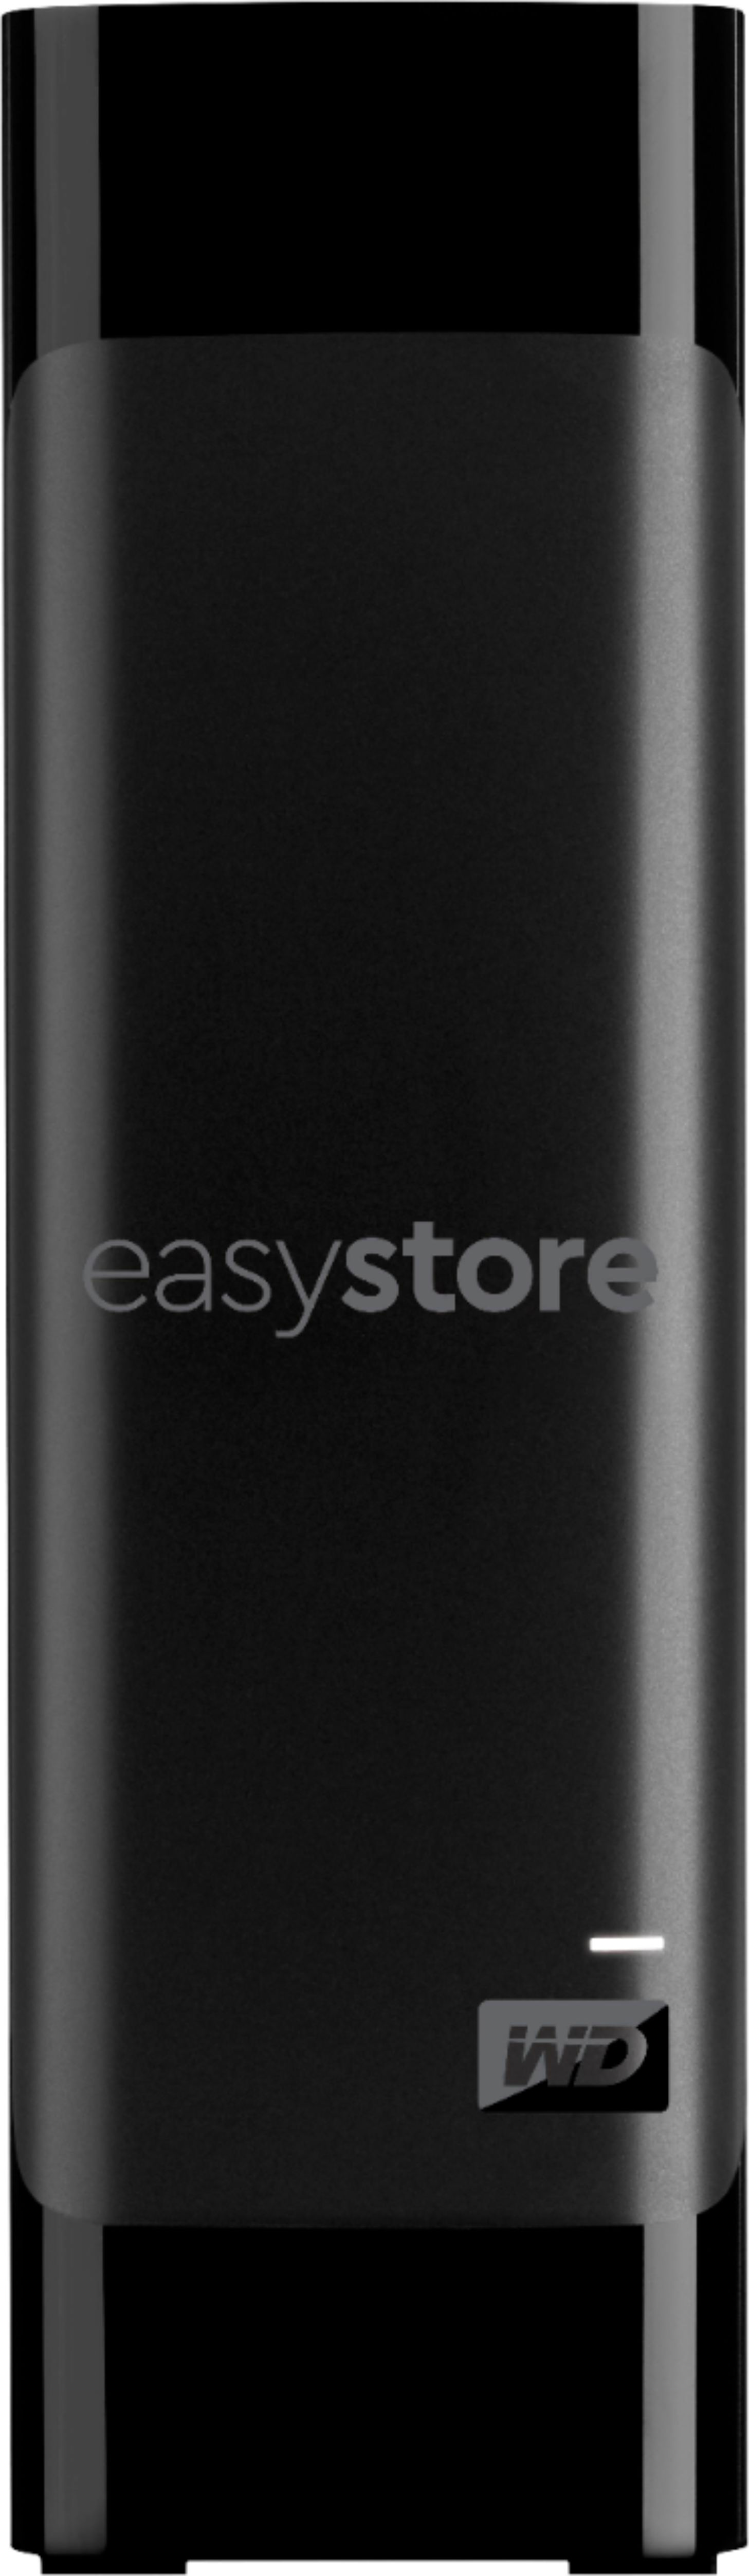 WD easystore 16TB External USB 3.0 Hard Drive Black WDBAMA0160HBK-NESN - Best Buy $260